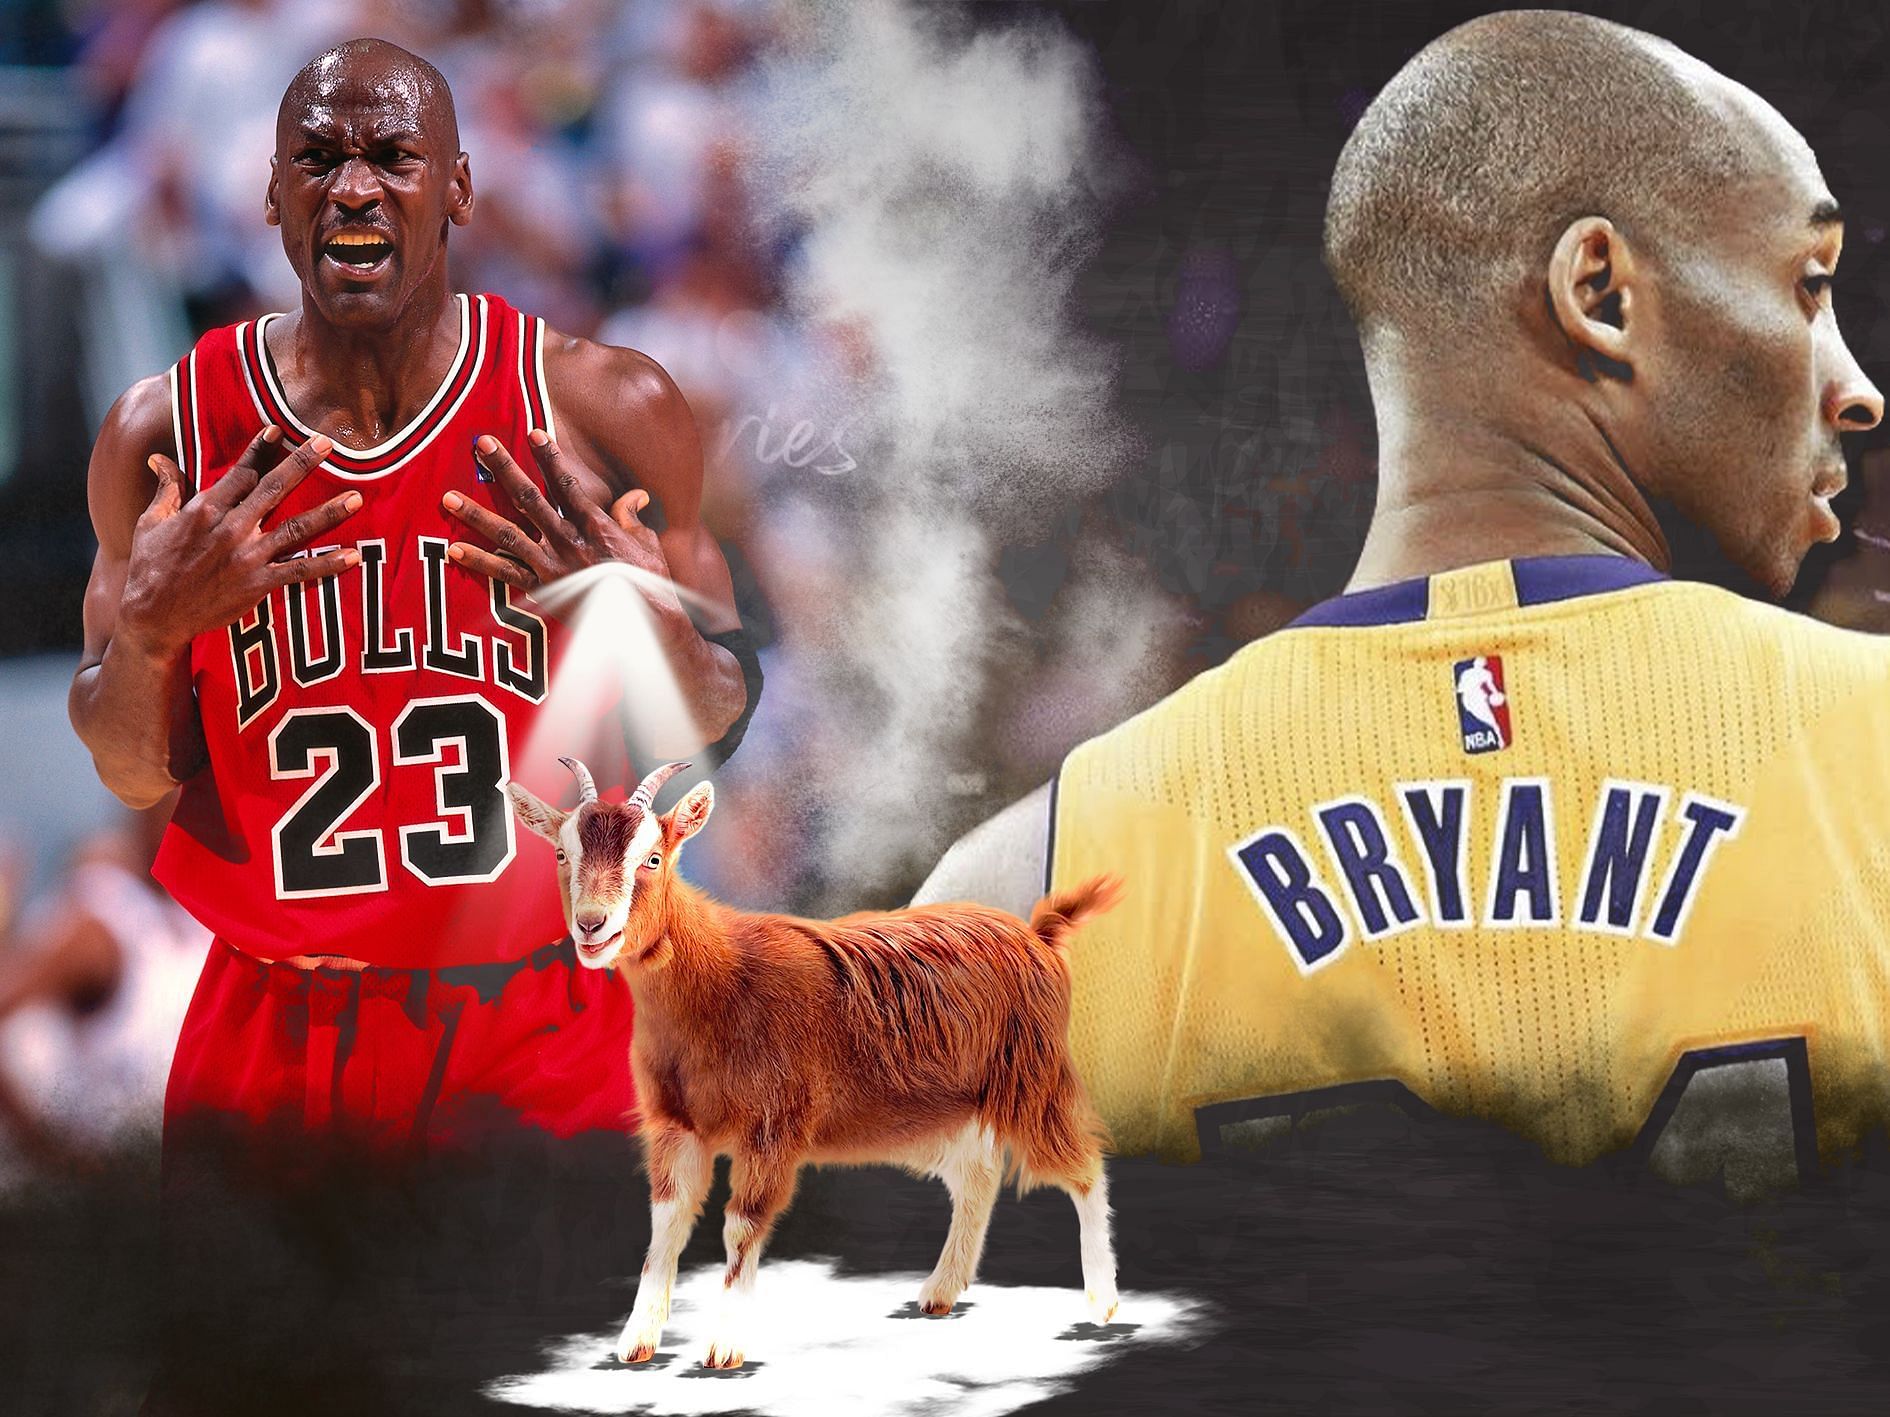 &ldquo;Kobe is Michael Jordan just on steroids&rdquo;